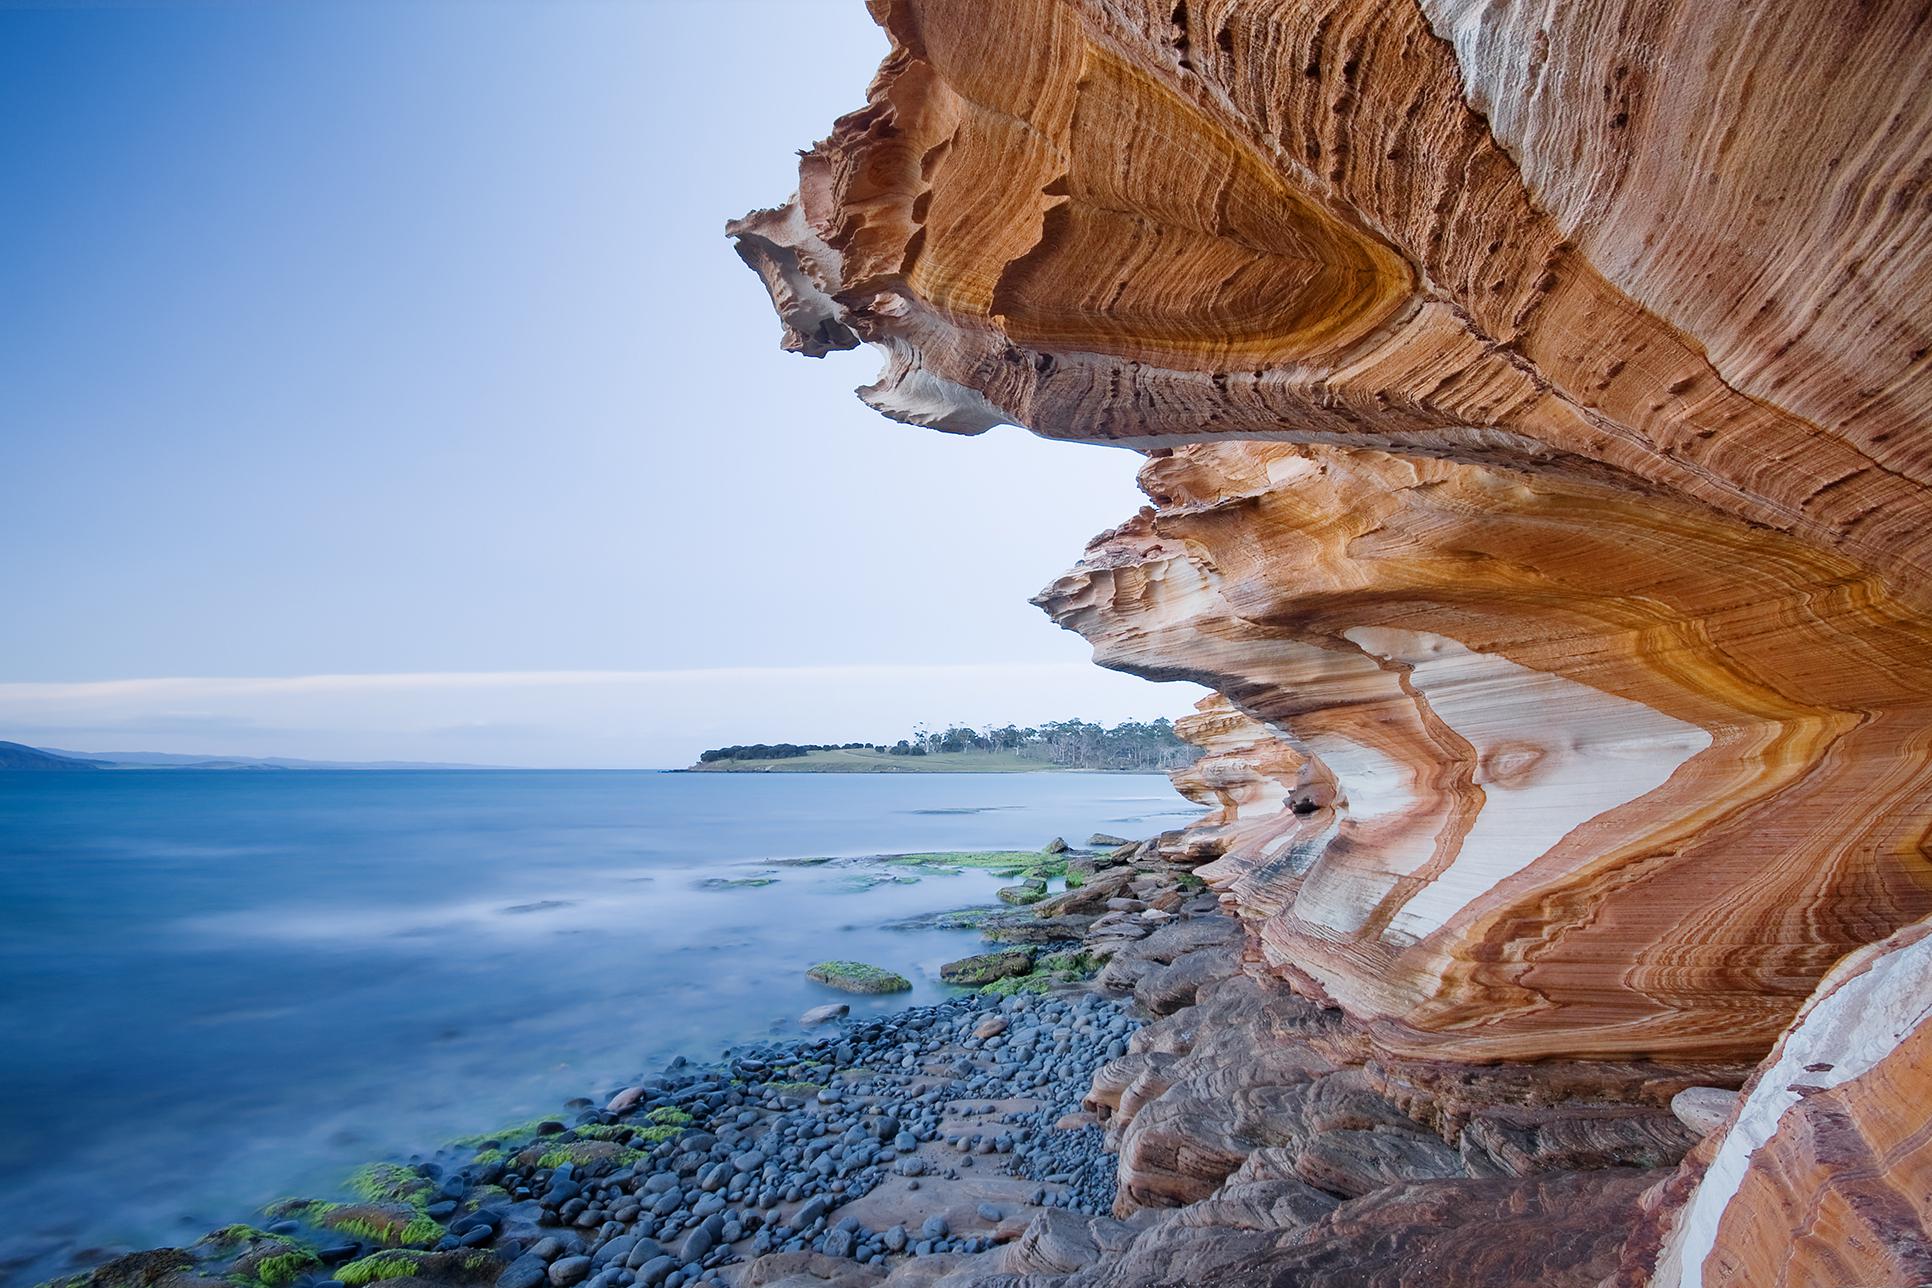 Painted cliffs maria island tasmania australia - - High resolution